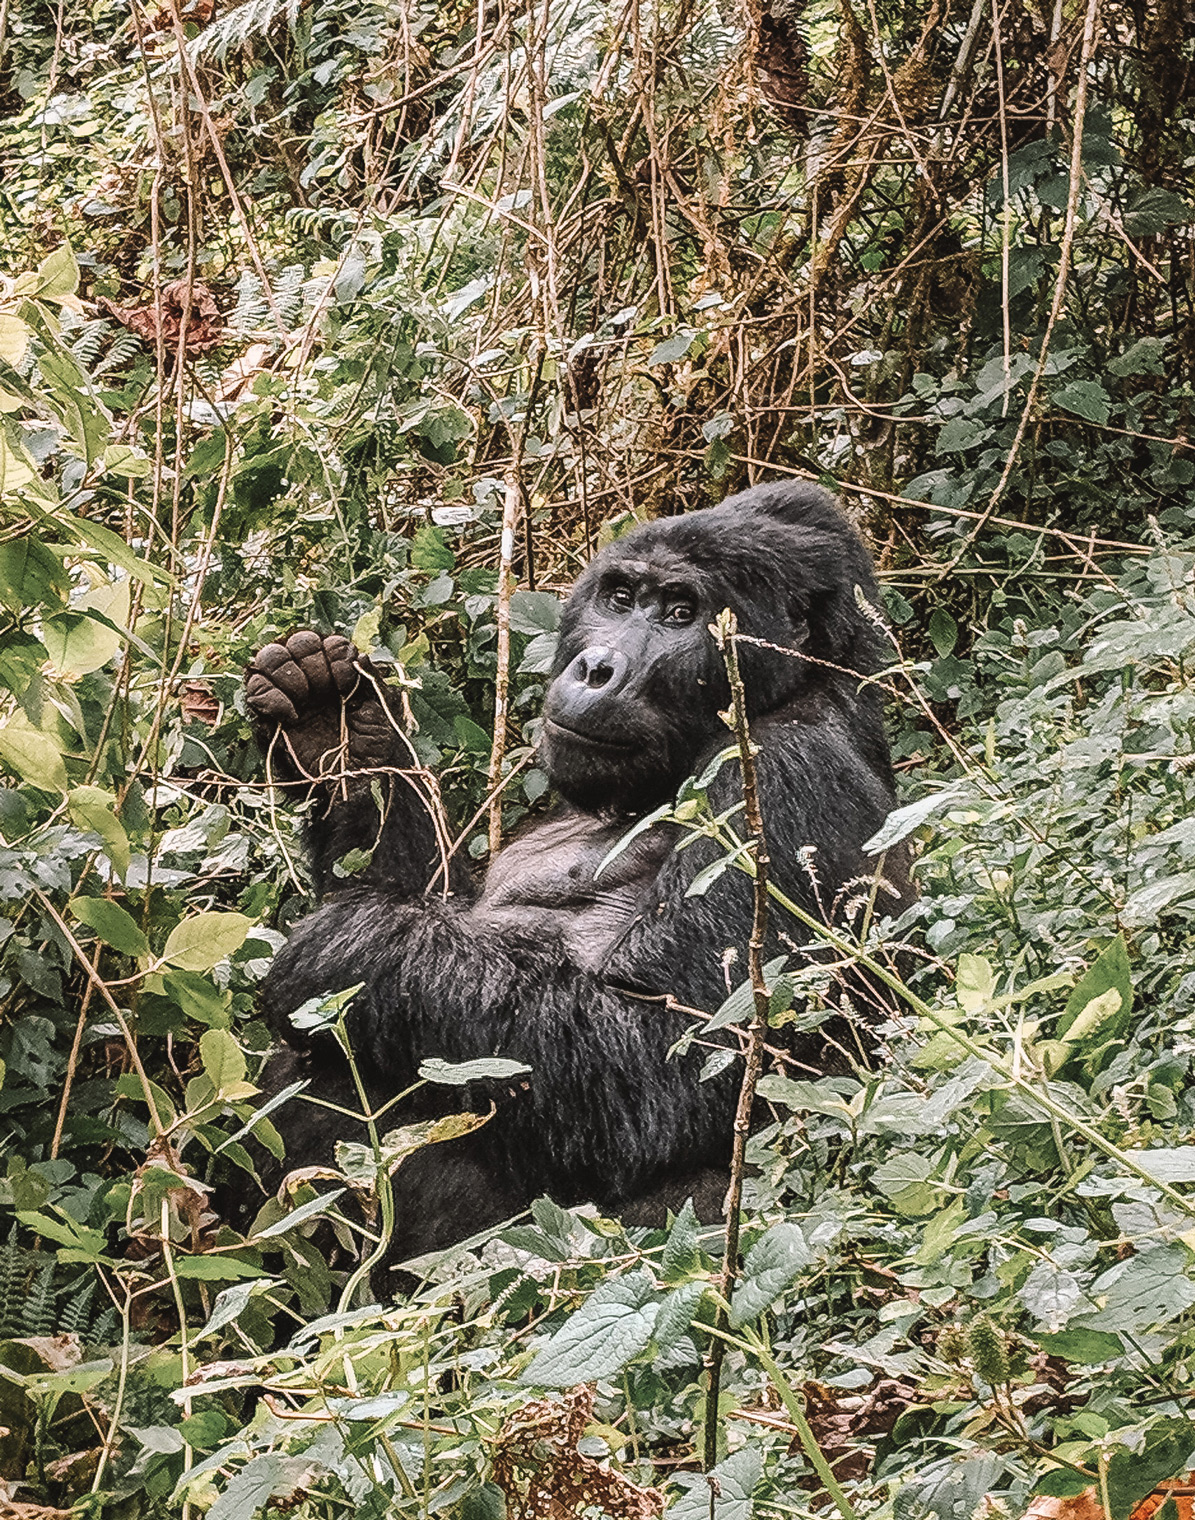 A Photo Of A Gorilla From My Trek